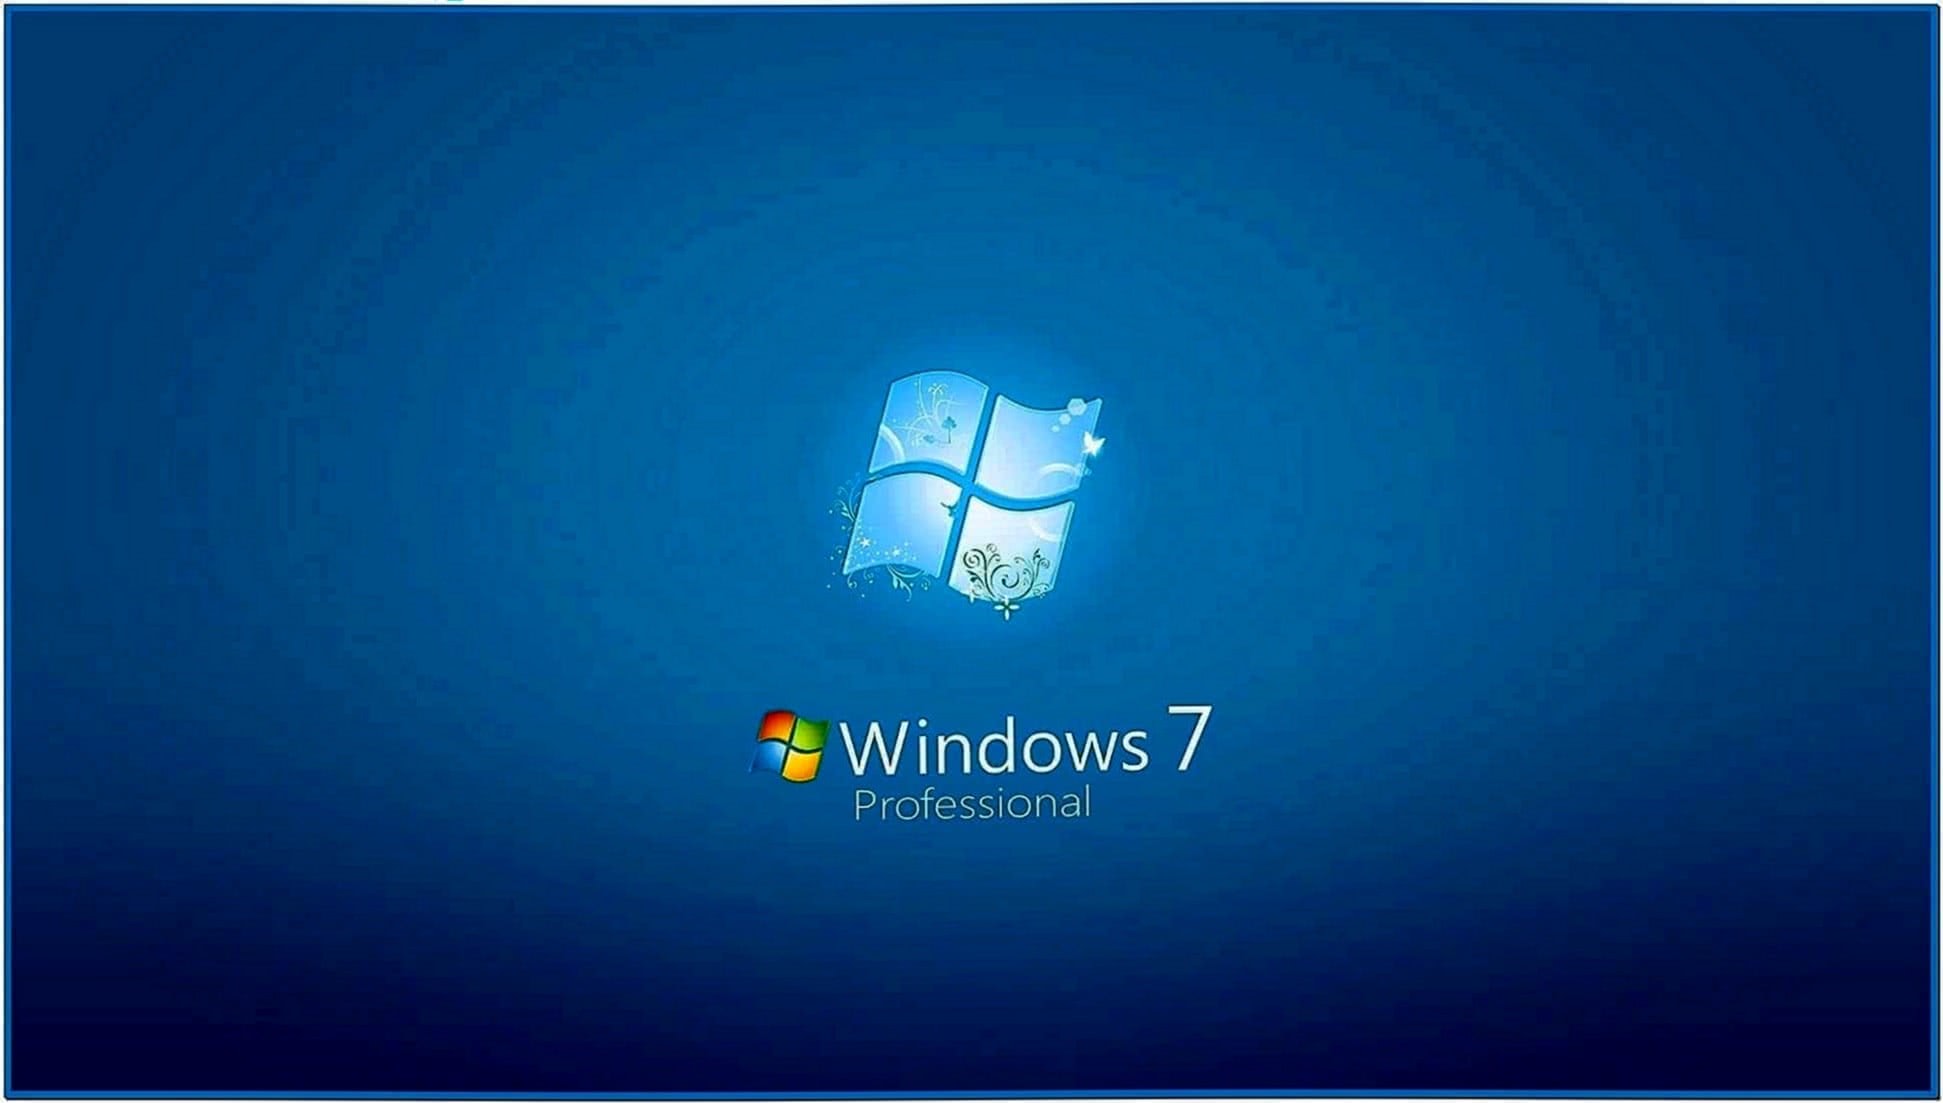 Screensaver Windows 7 in HD